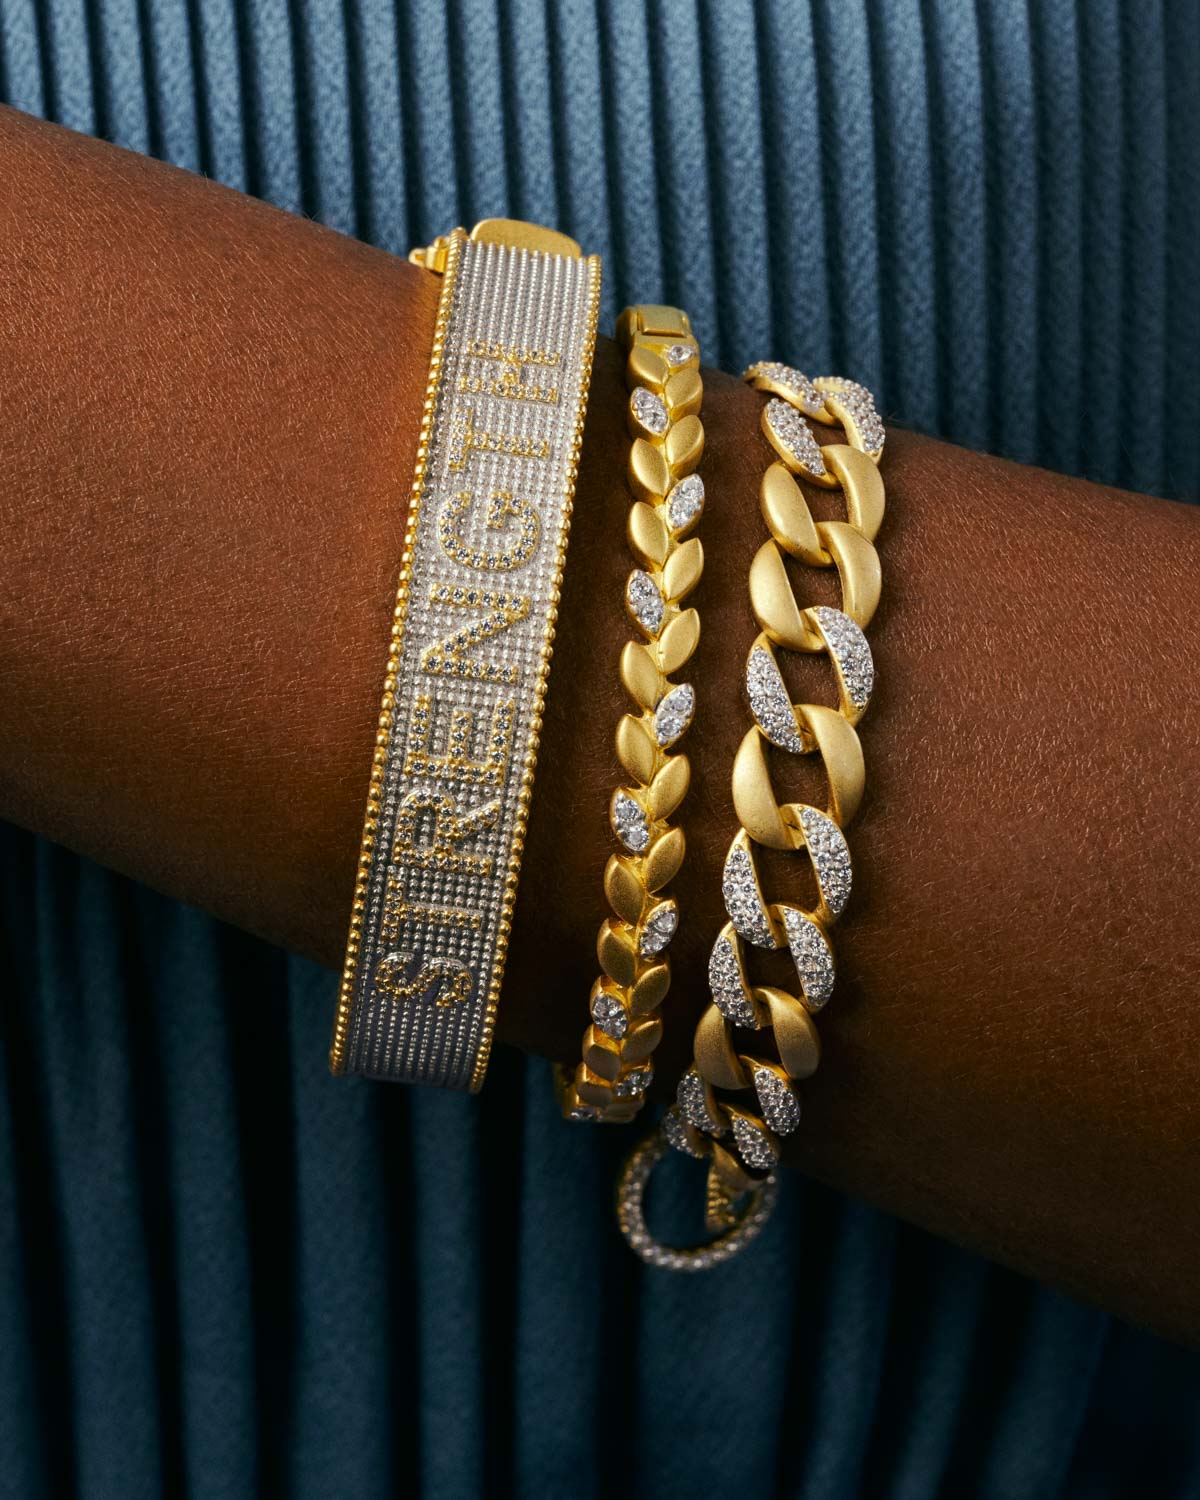 Freida Rothman The Strength Chain Link Bracelet | Gabrielle's